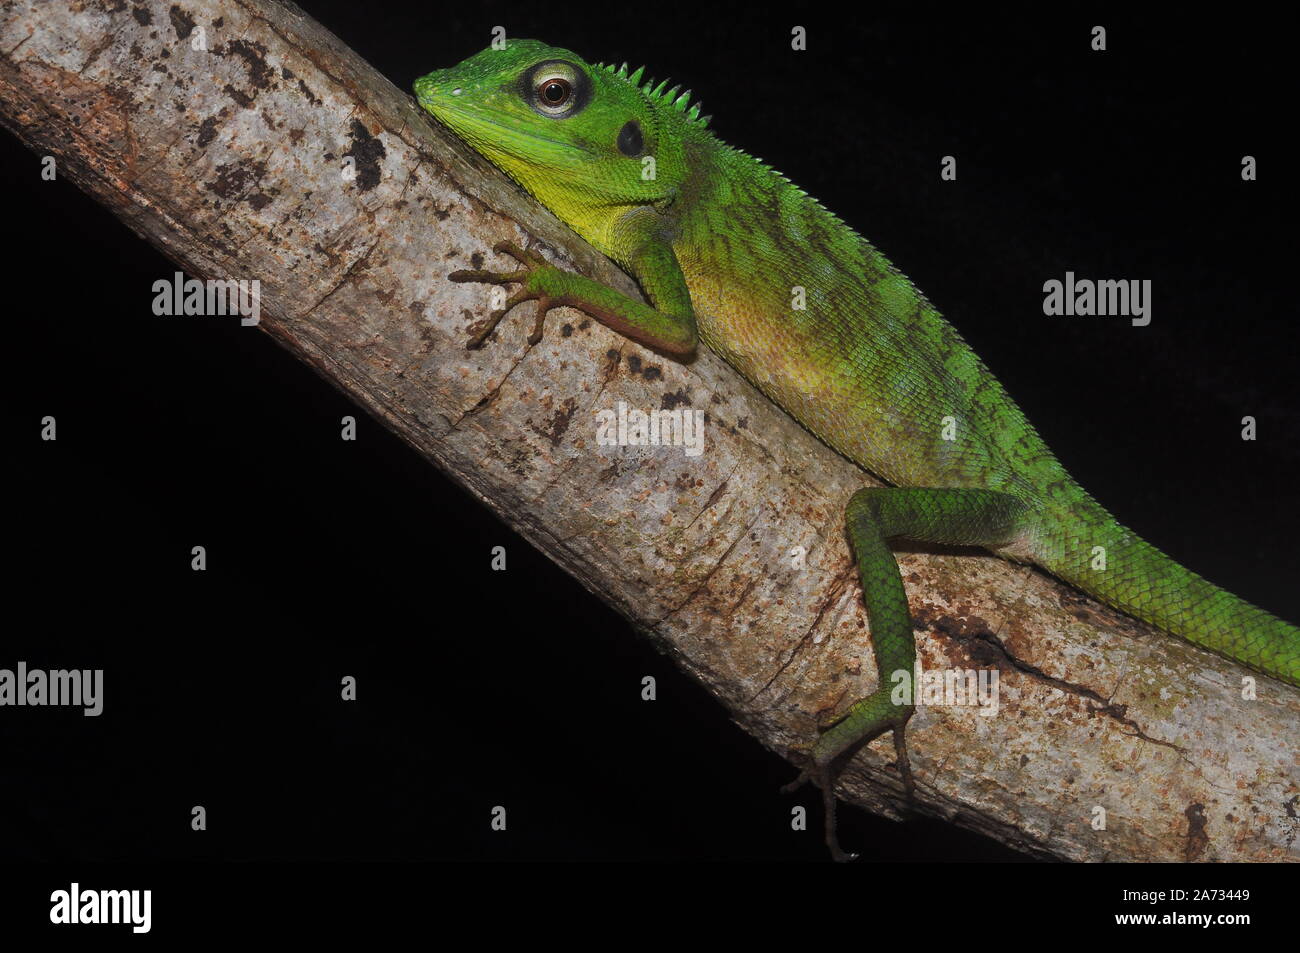 Crested Green Lizard (Bronchocela cristatella). Stock Photo